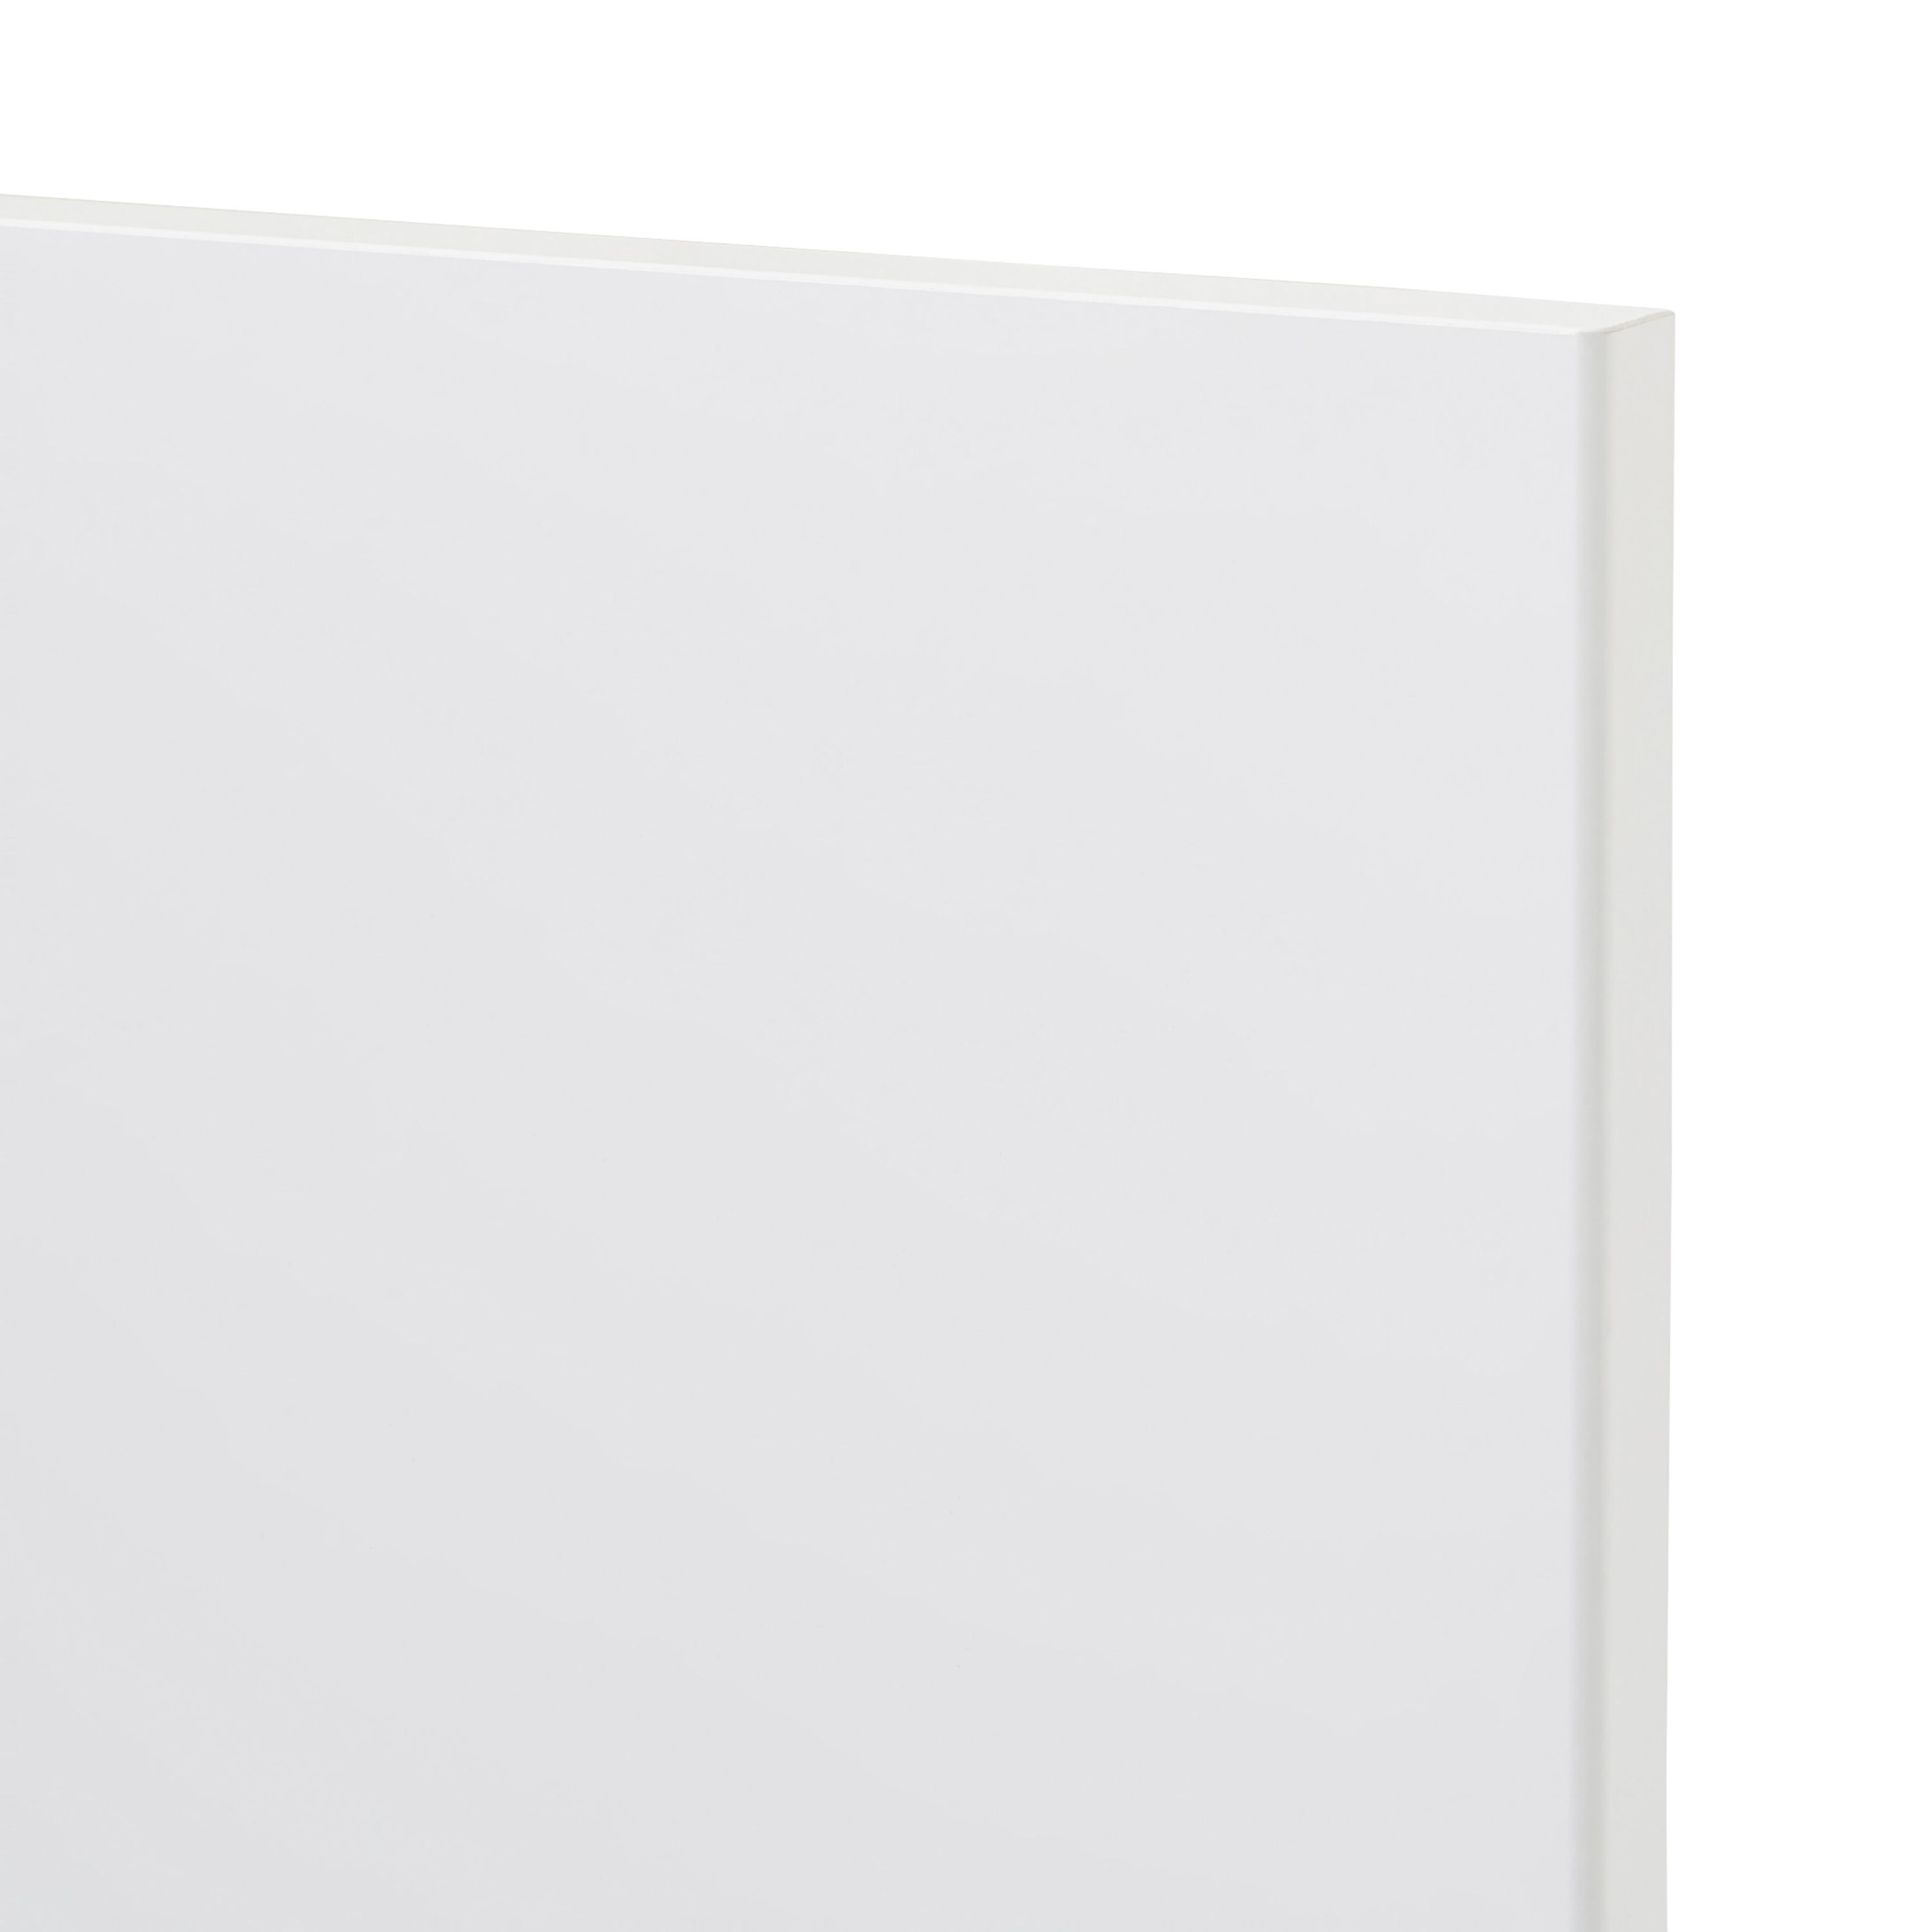 GoodHome Garcinia Gloss white integrated handle Bi-fold Cabinet door (W)400mm (H)356mm (T)19mm